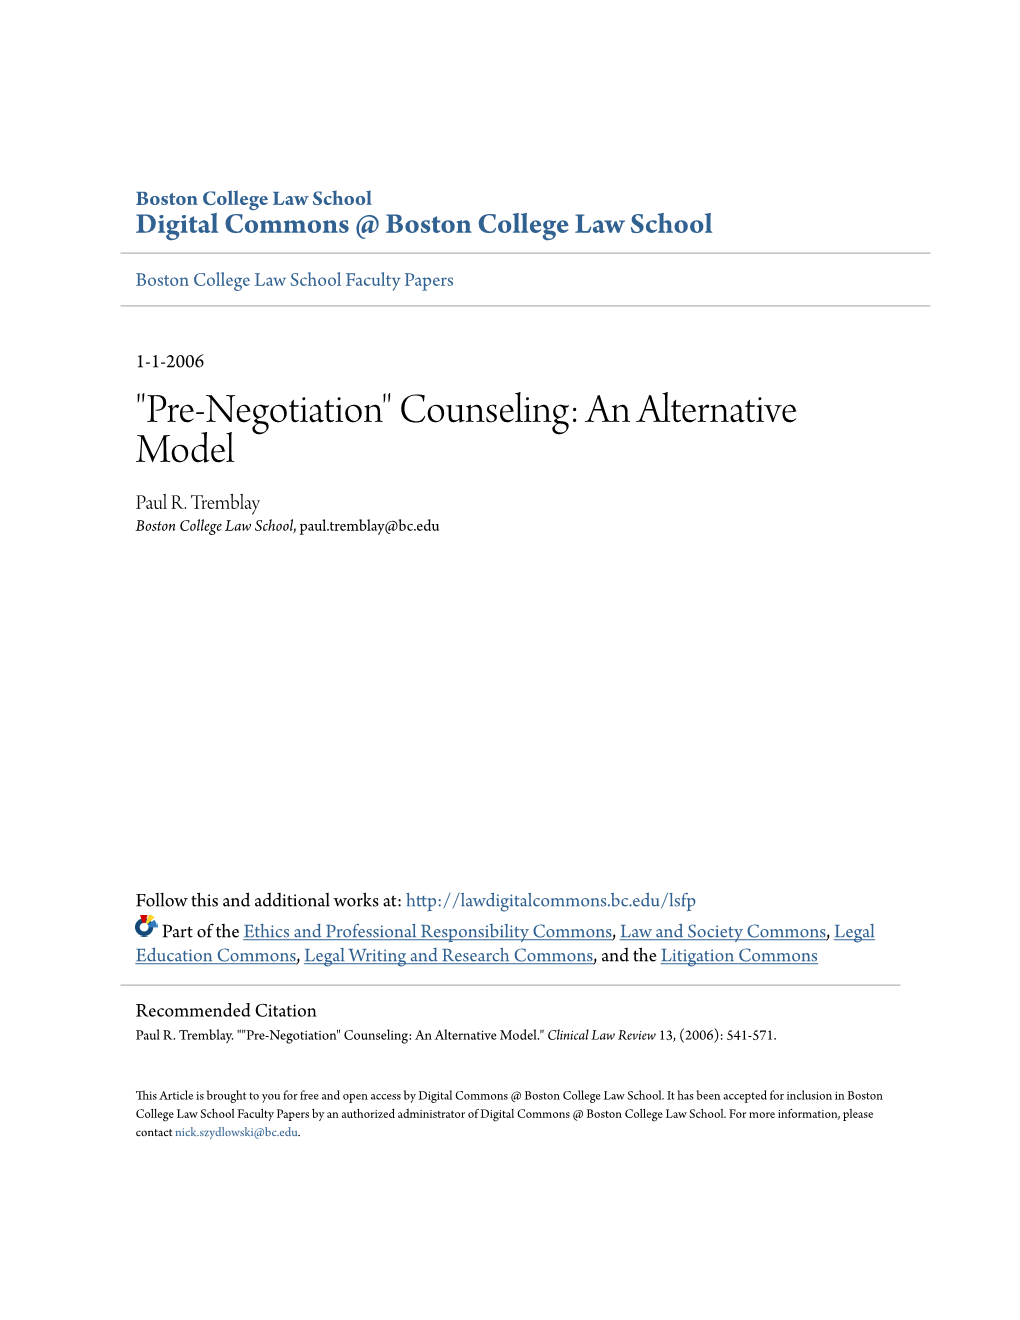 "Pre-Negotiation" Counseling: an Alternative Model Paul R